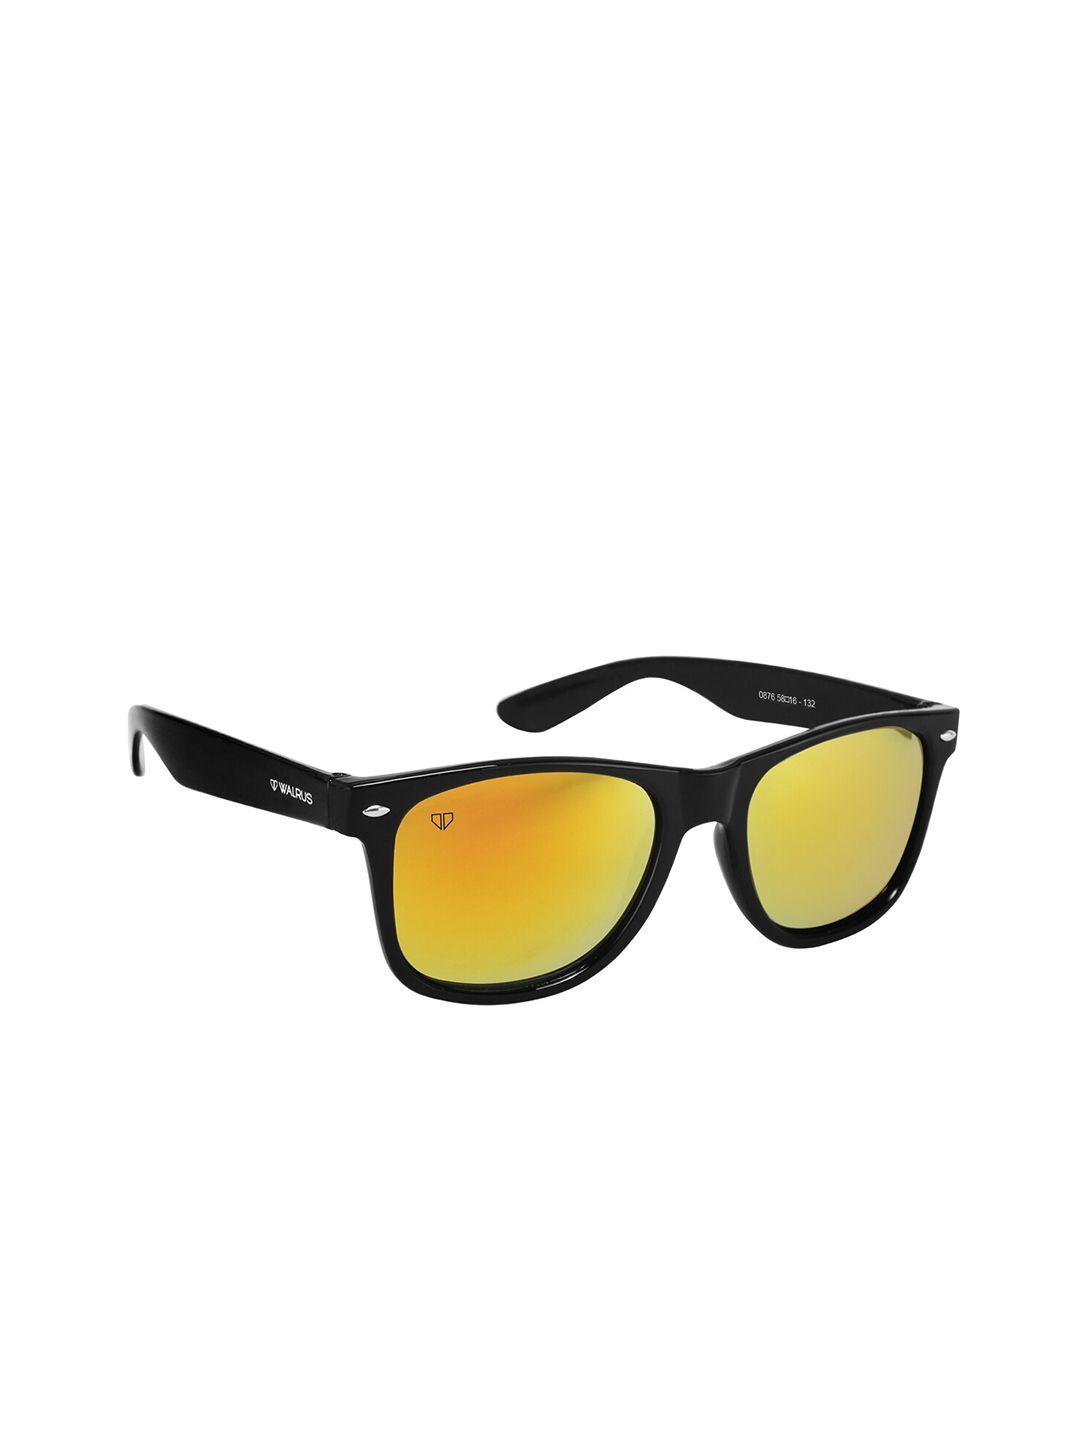 walrus men gold lens & black wayfarer sunglasses with uv protected lens